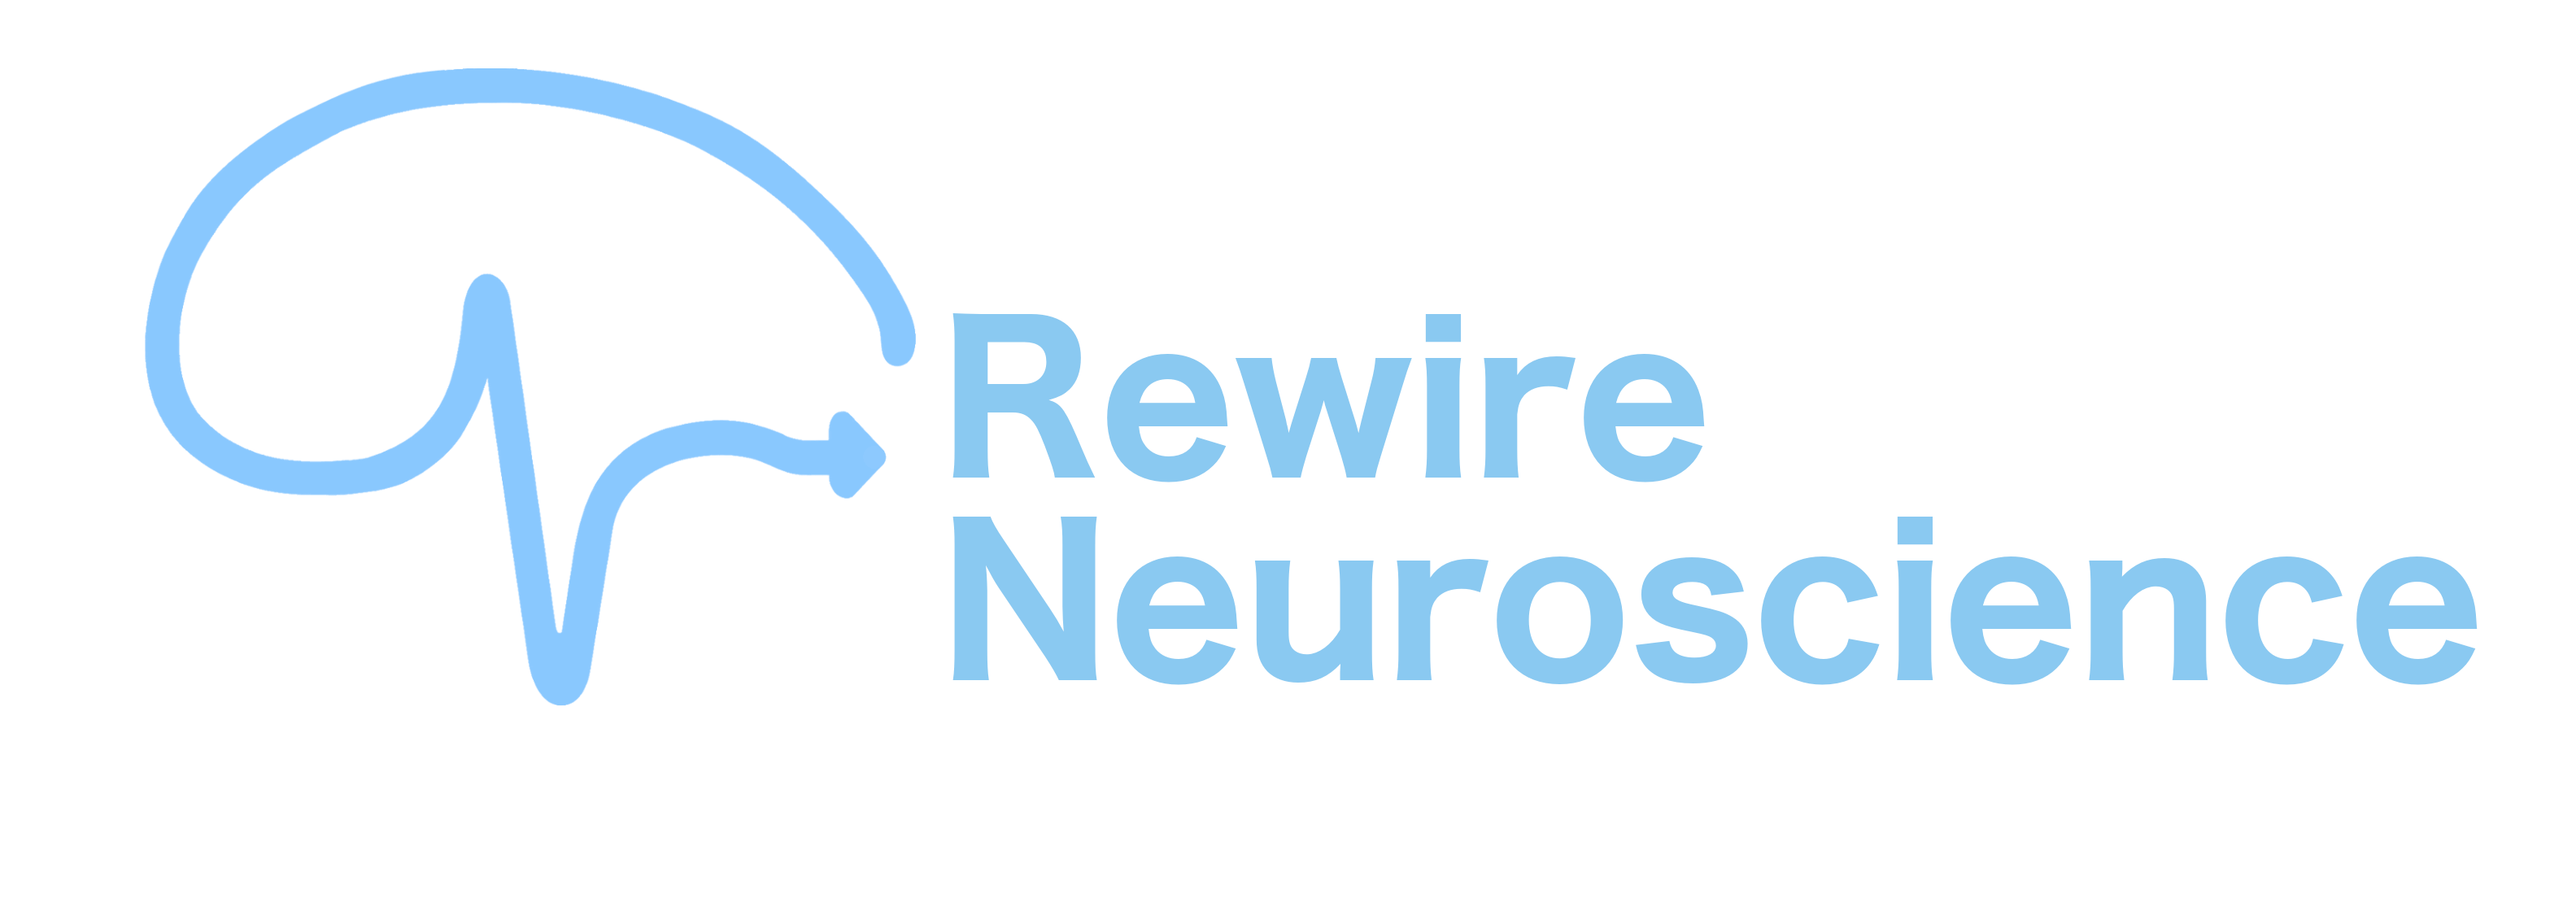 Neuroscience Logo - Rewire Neuroscience vest